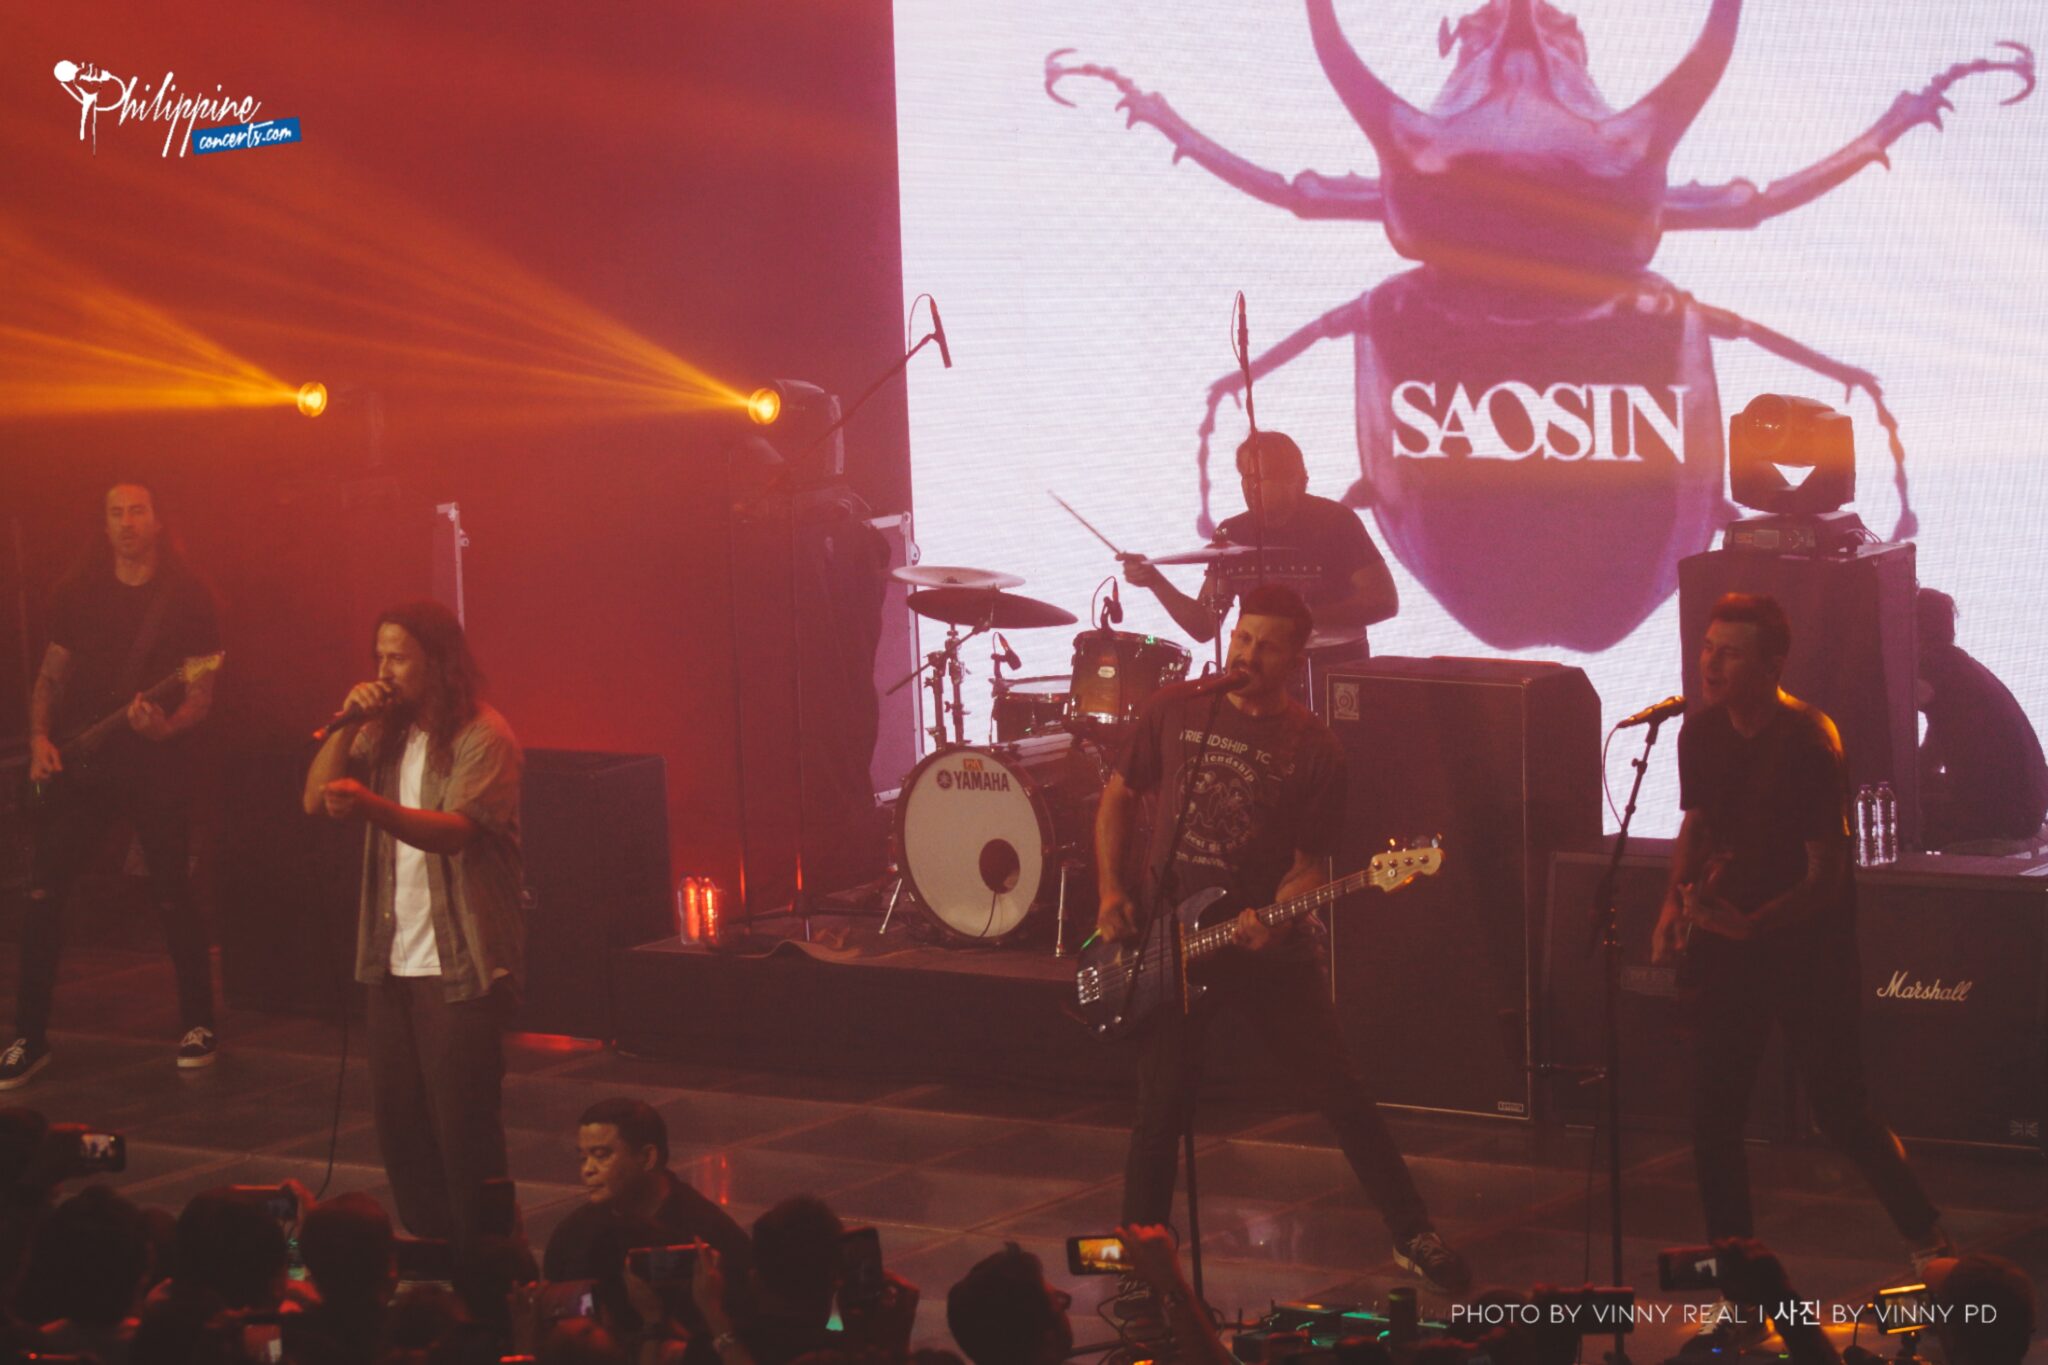 Saosin Rocks Manila with Electrifying Performance at SM Skydome